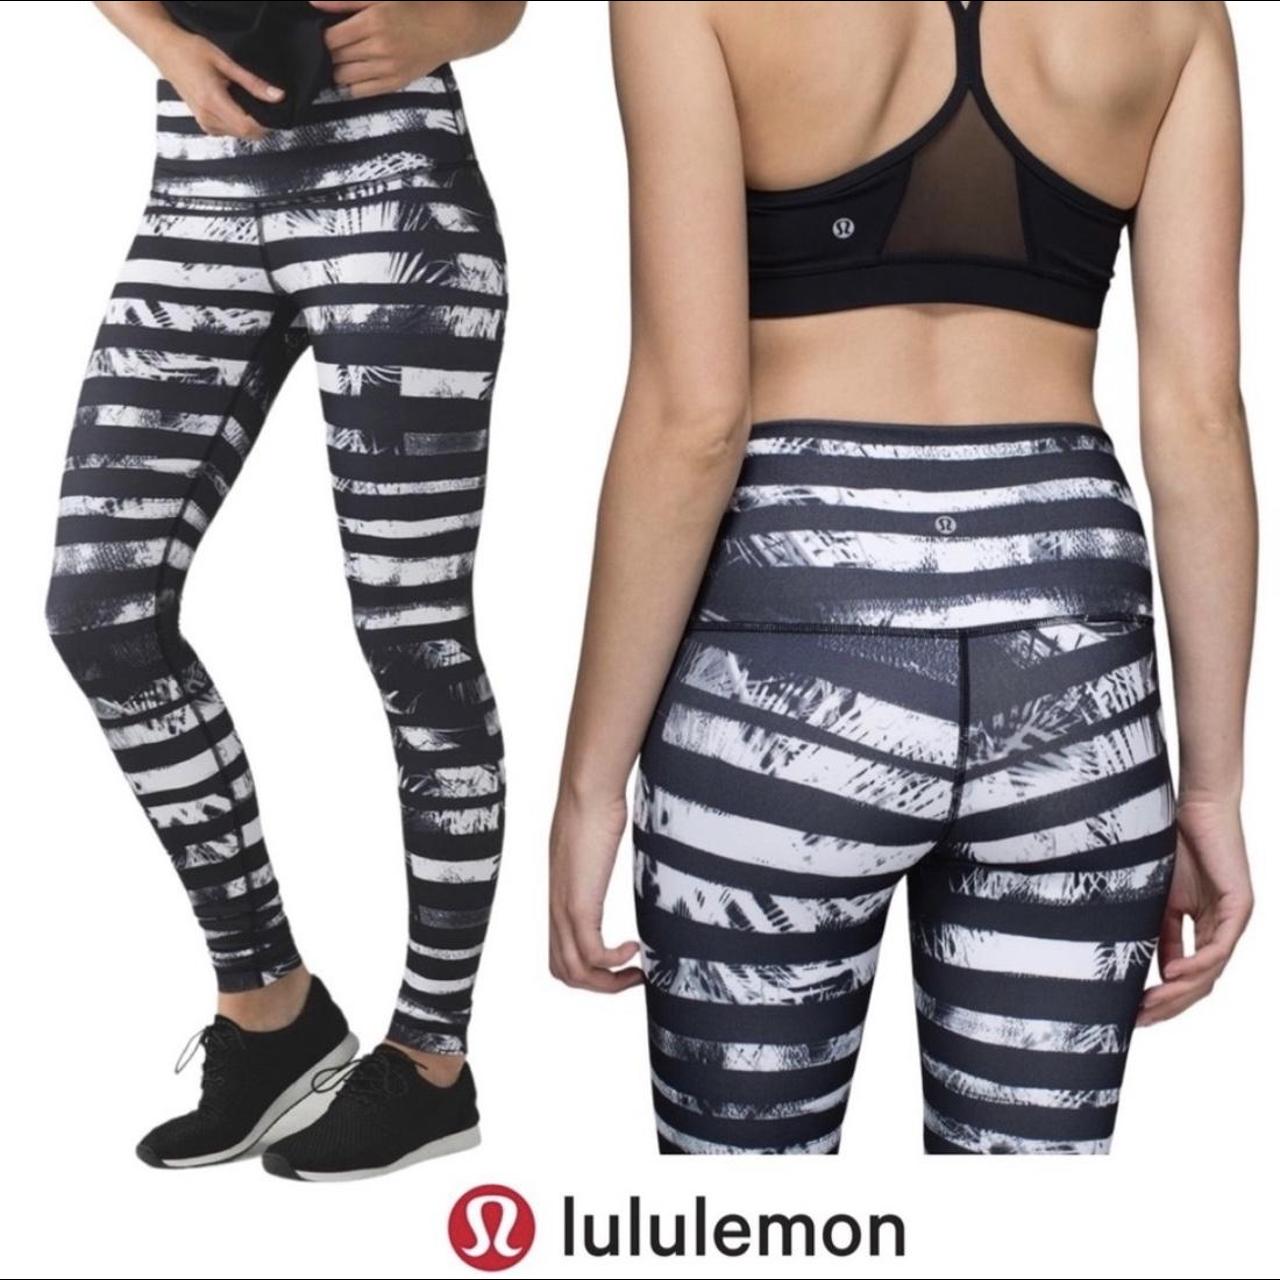 Lululemon black Wunder Under (Luon fabric) leggings.